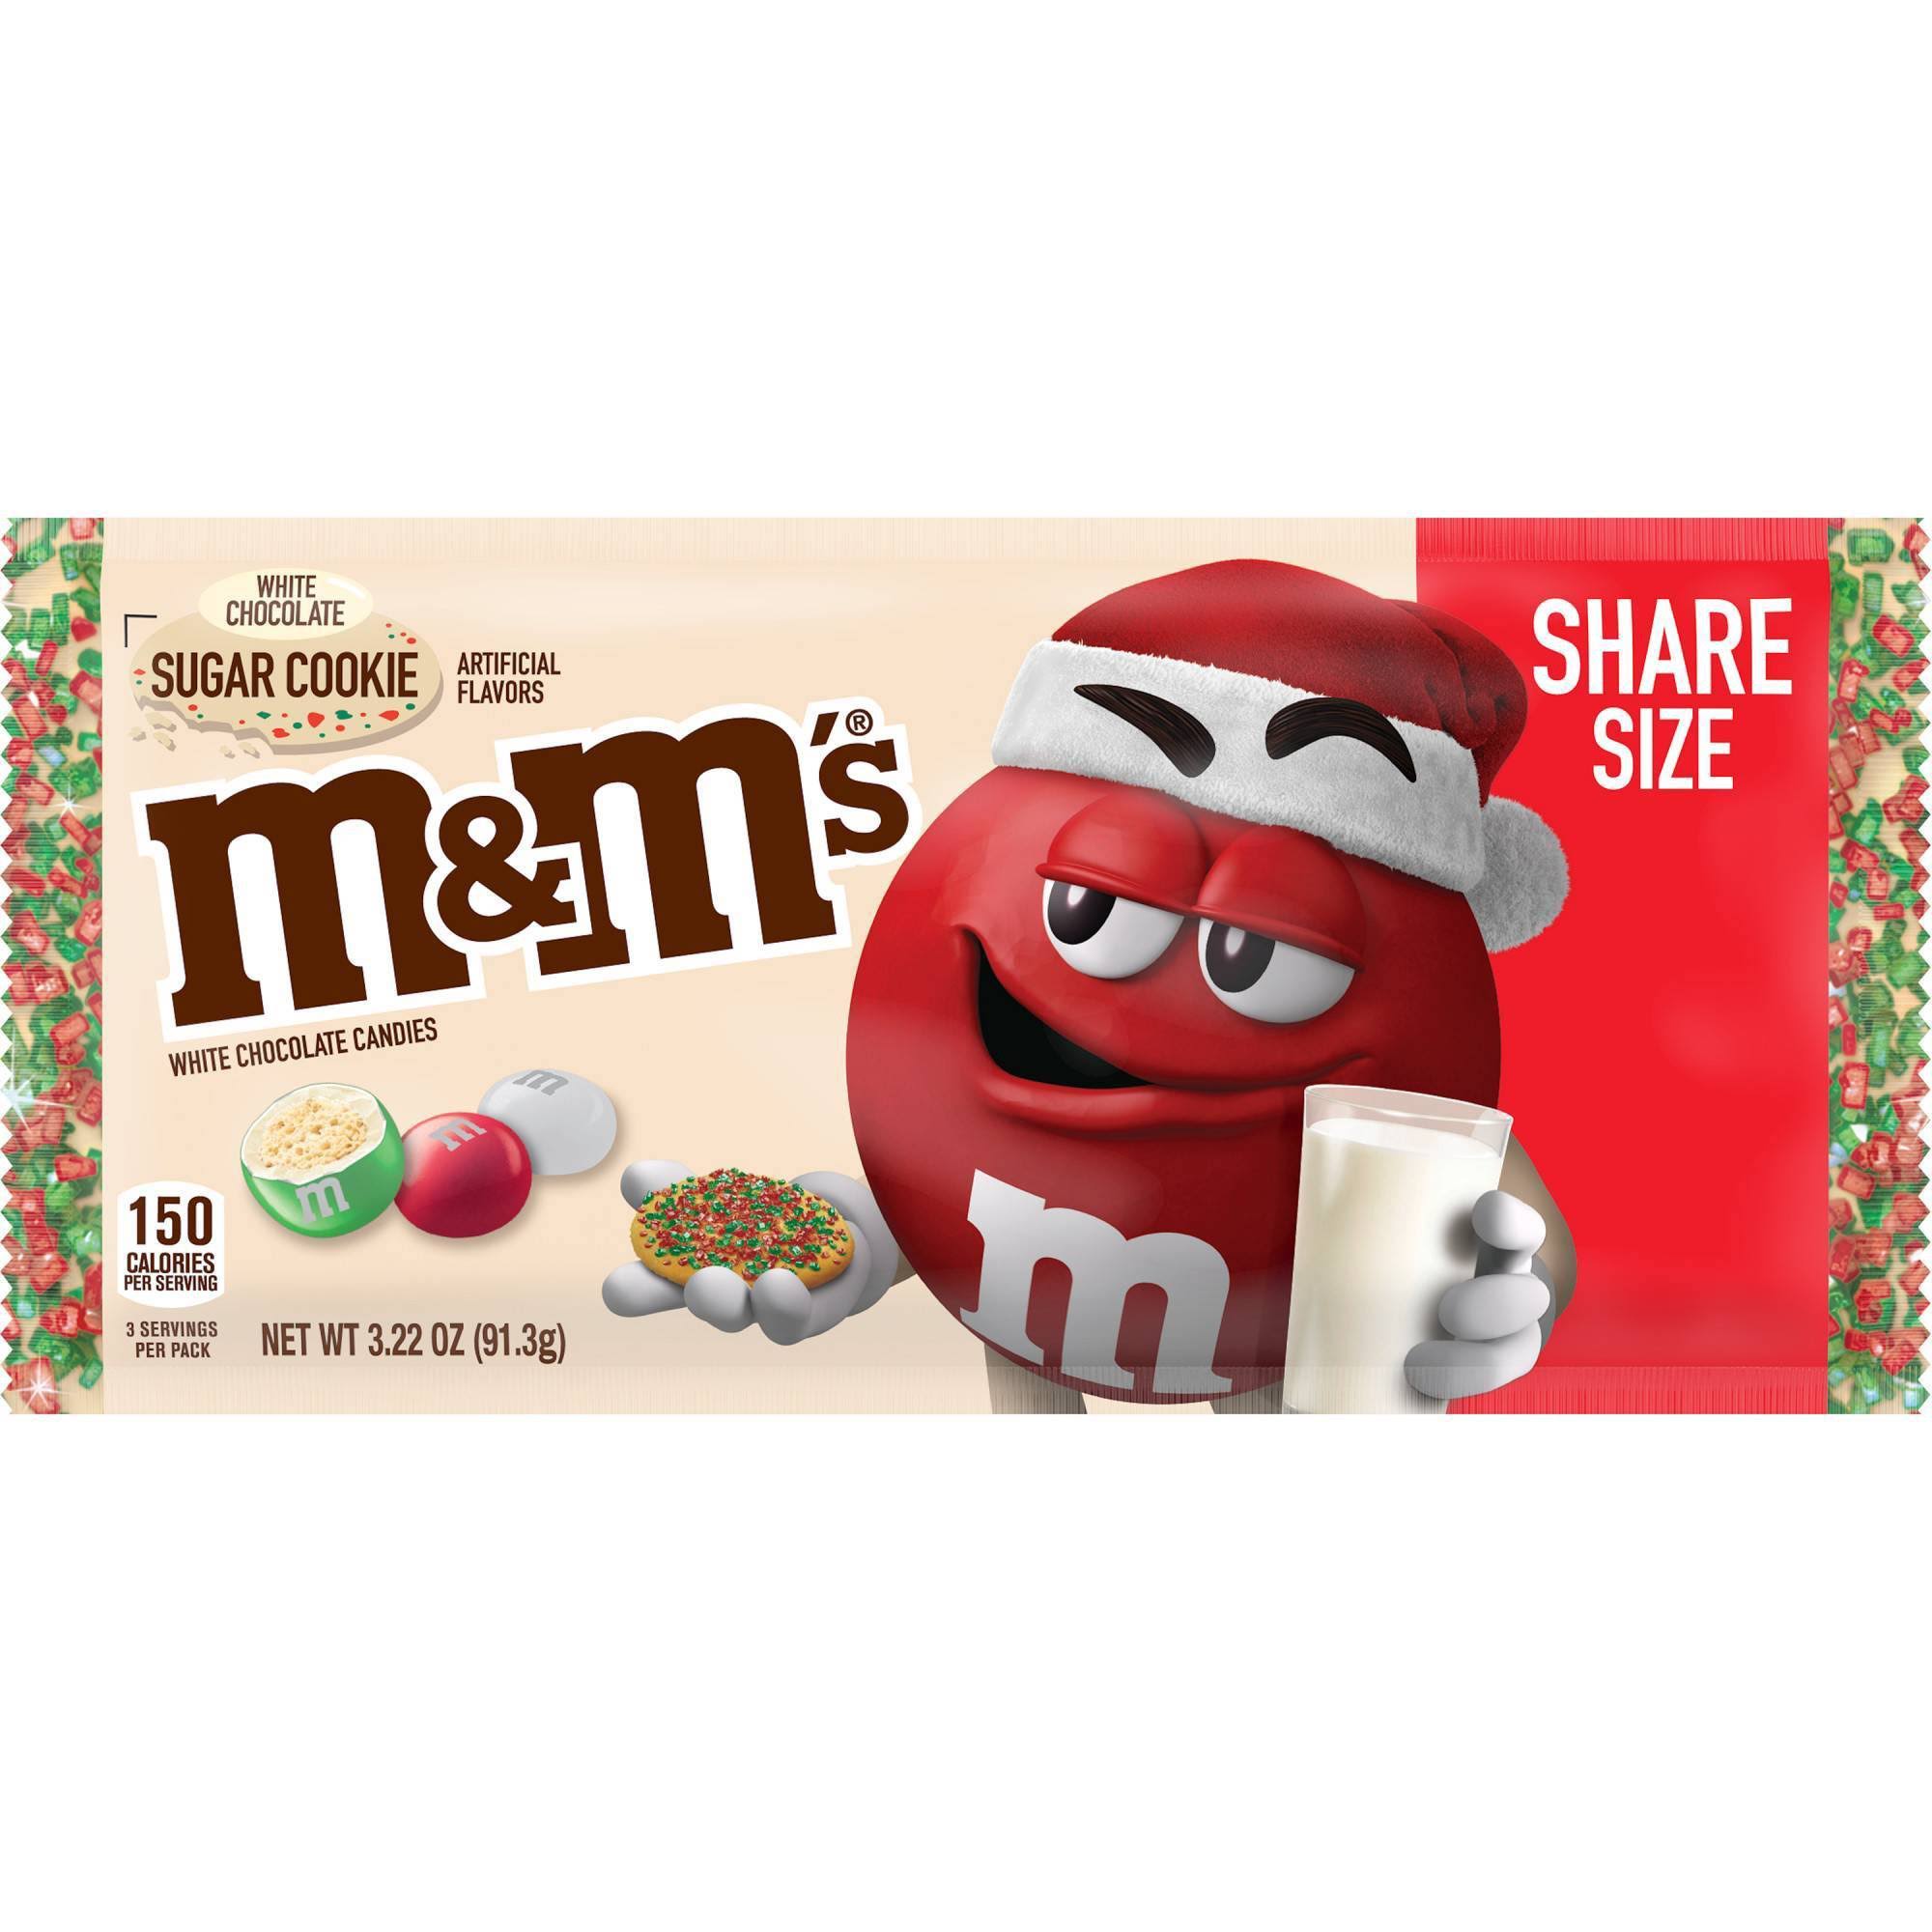 M&M's White Chocolate Candies, Sugar Cookie, Share Size - 3.22 oz